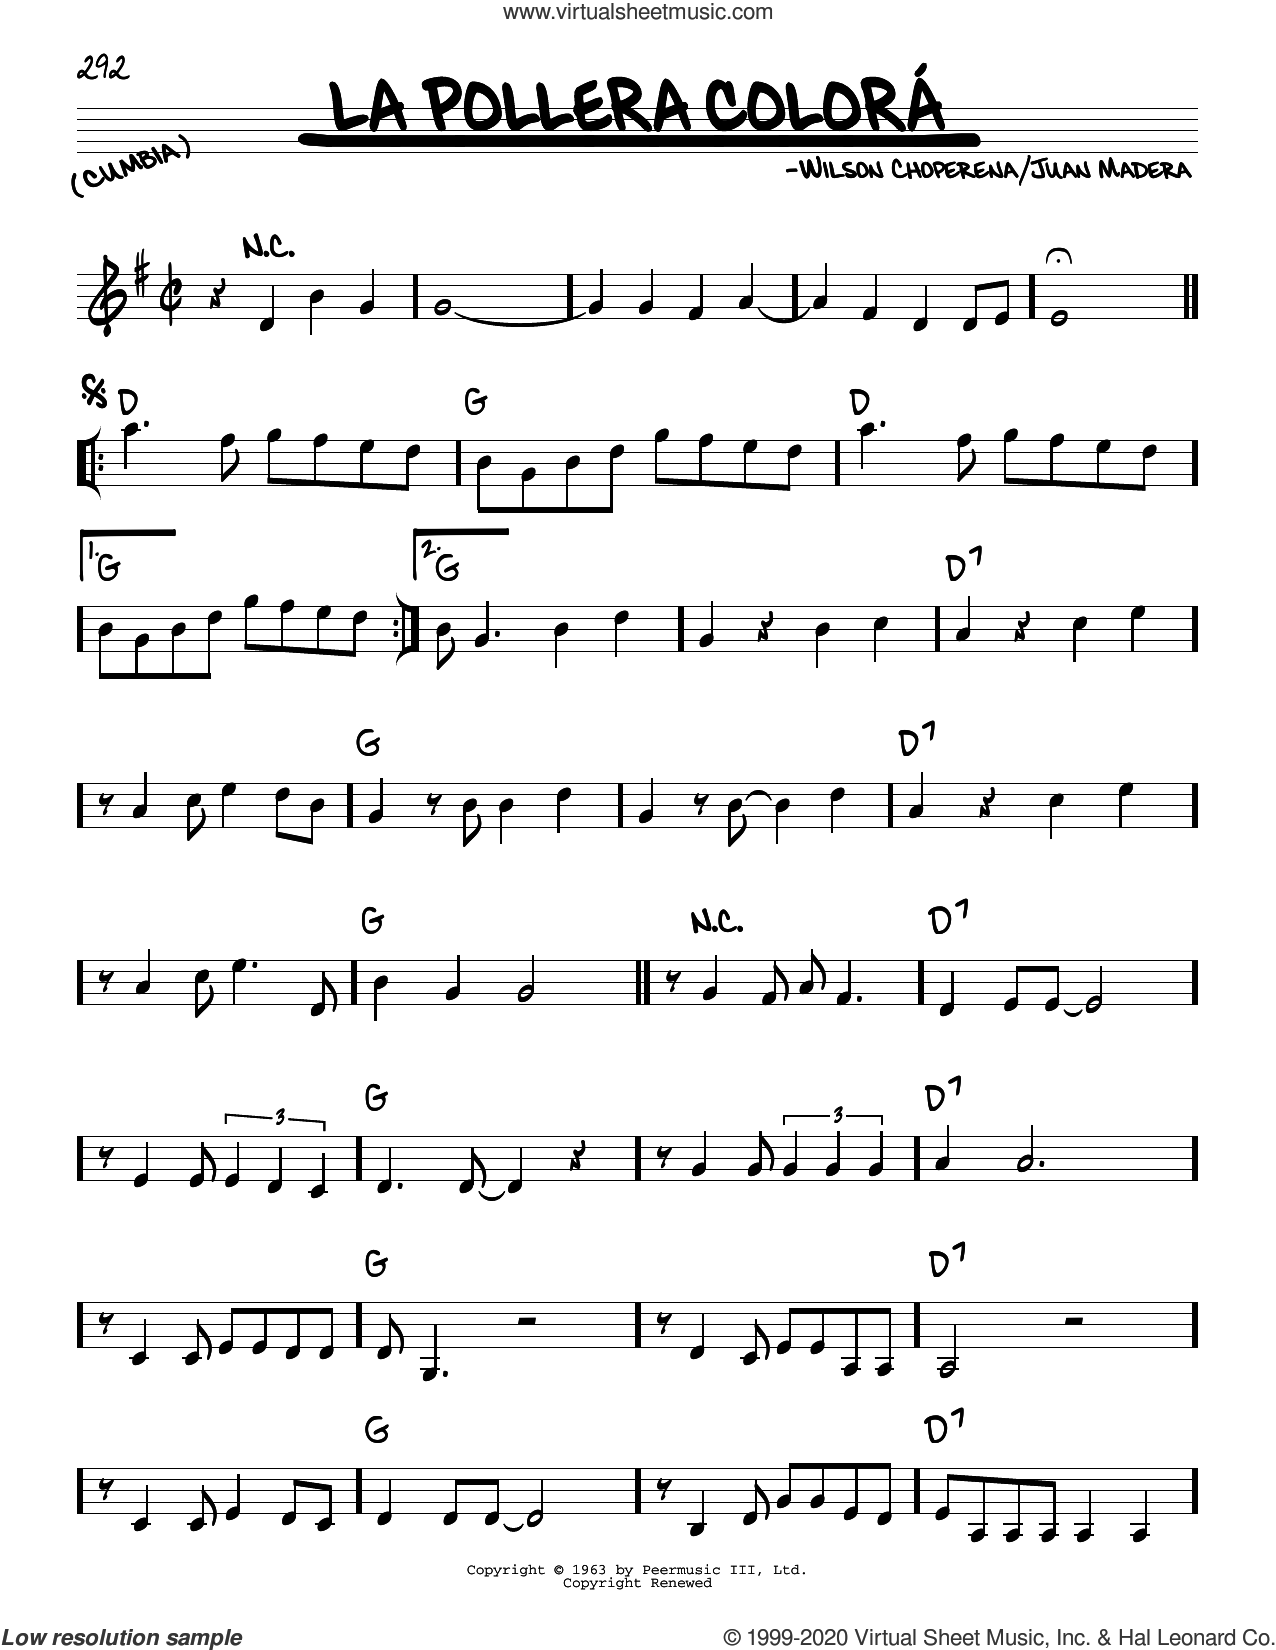 Wilson Choperena La Pollera Colora Sheet Music Notes Chords Download Printable Piano Vocal